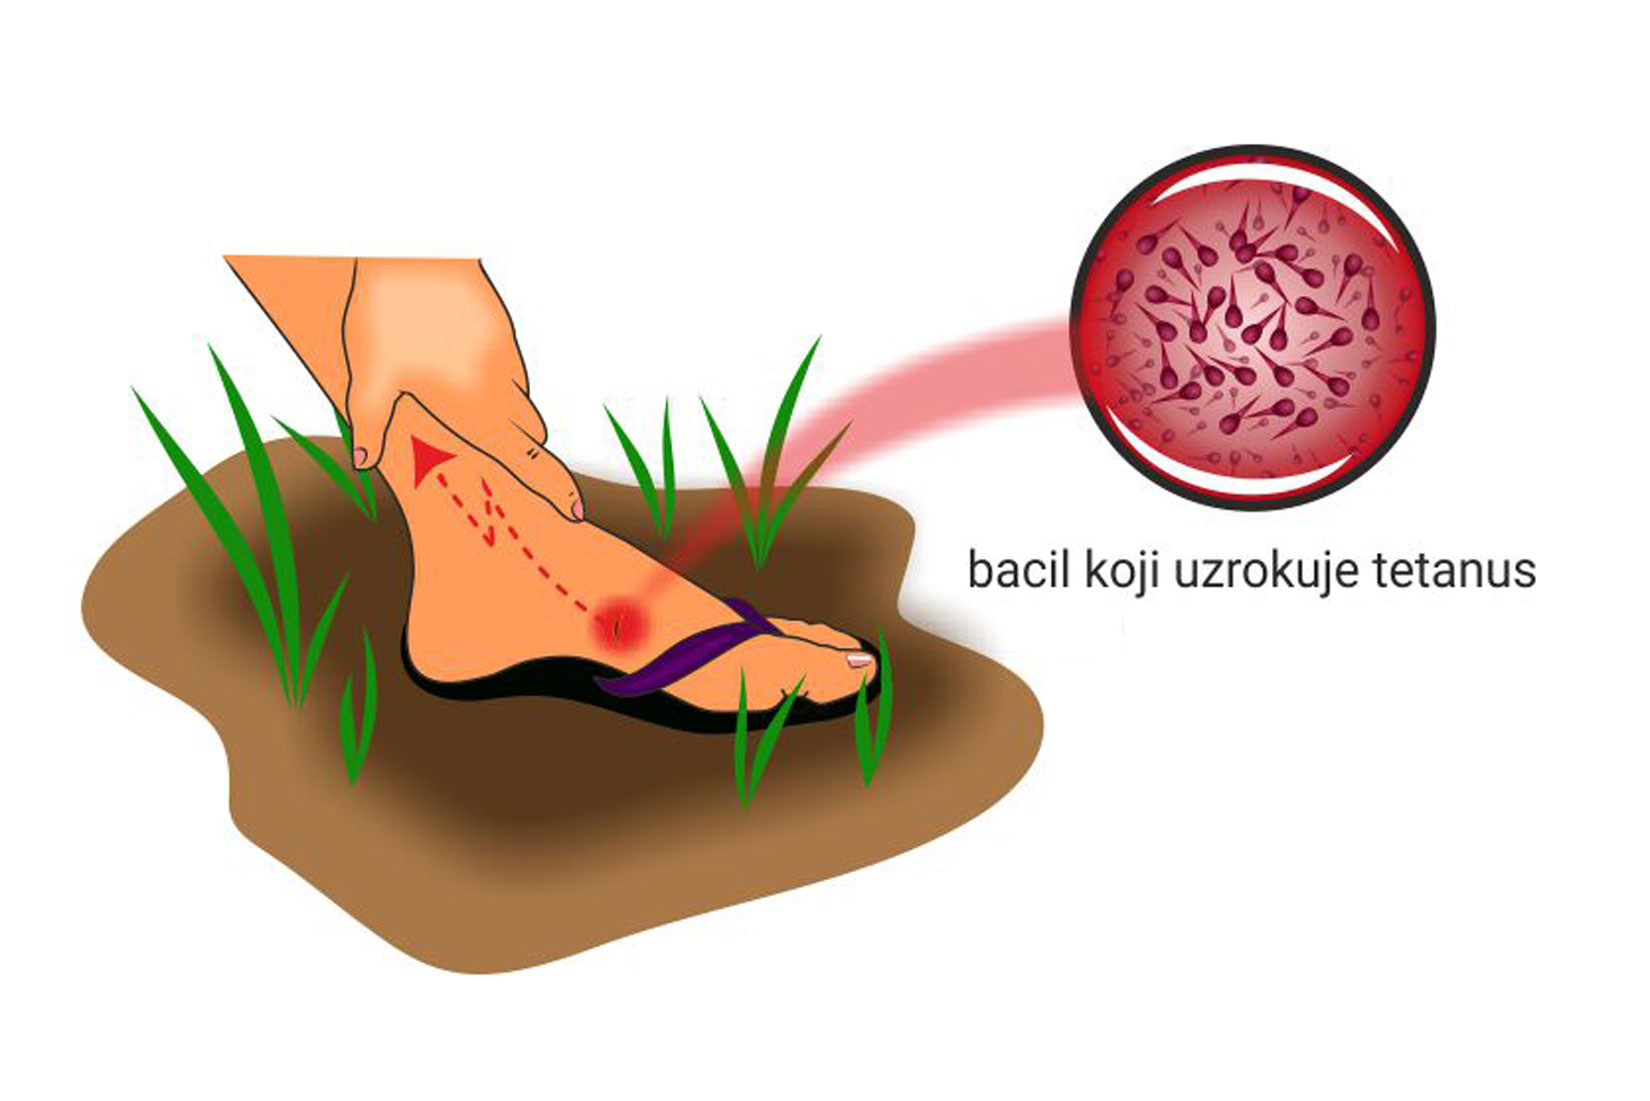 Slika prikazuje povrjeđeno boso stopalo s ranom koja je rizik za zarazu bakterijom tetanusa.